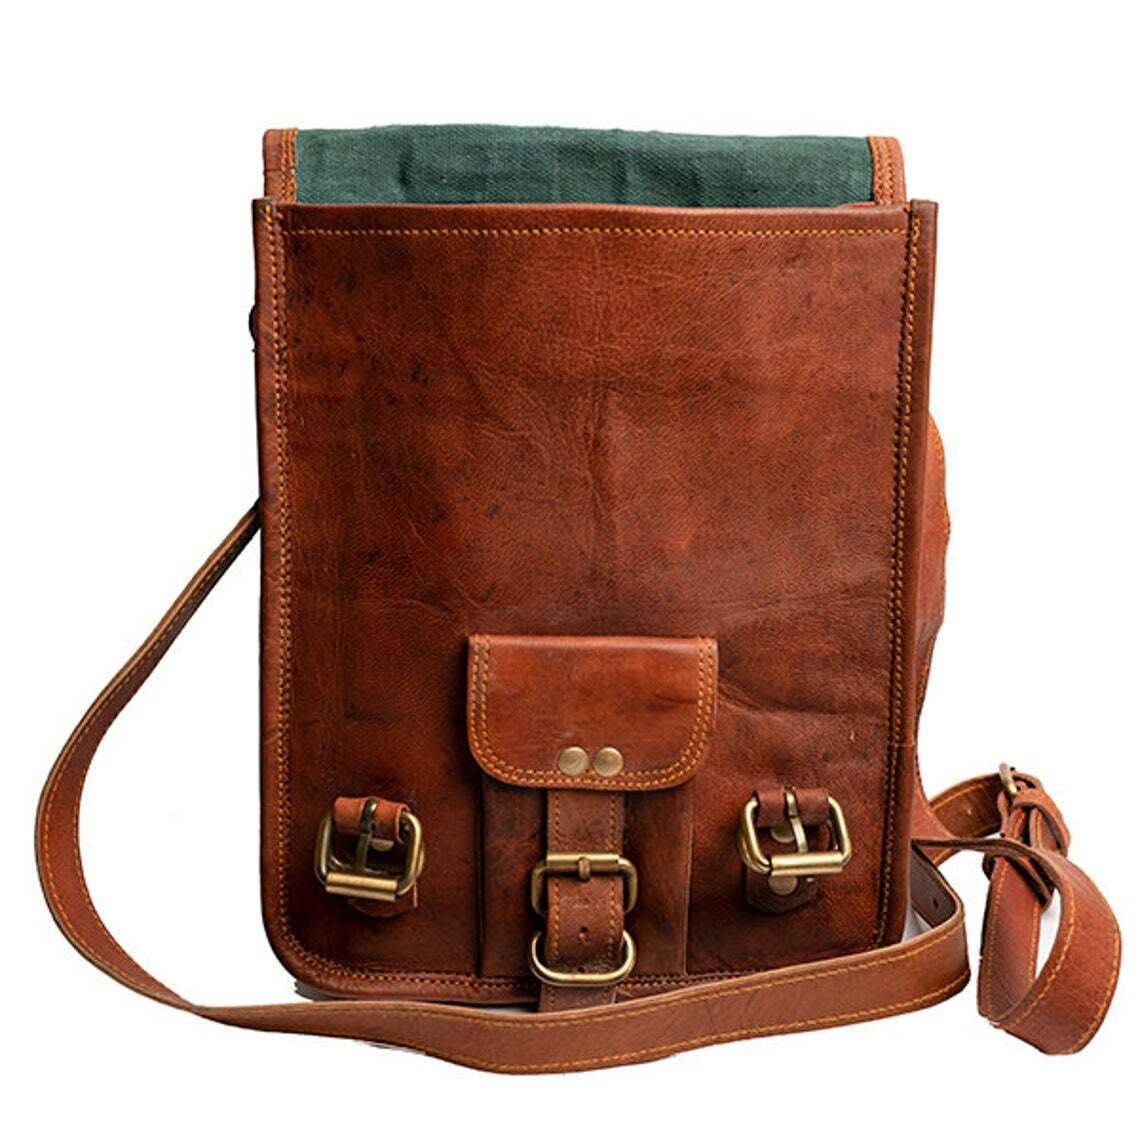 Handmade leather messenger bag